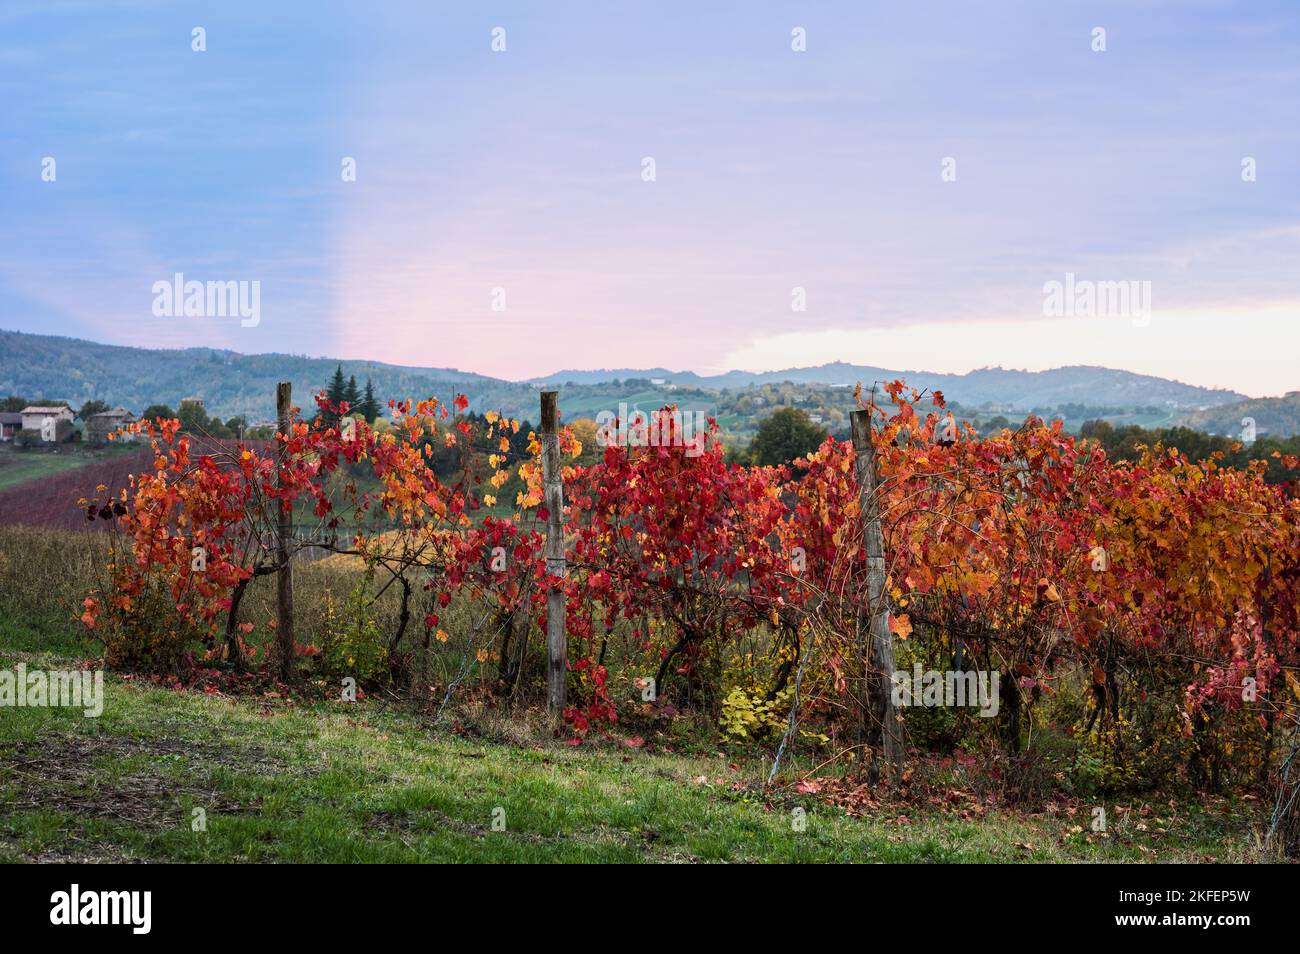 Autumn landscape, red and orange vineyards in Castelvetro di Modena, Italy. Stock Photo